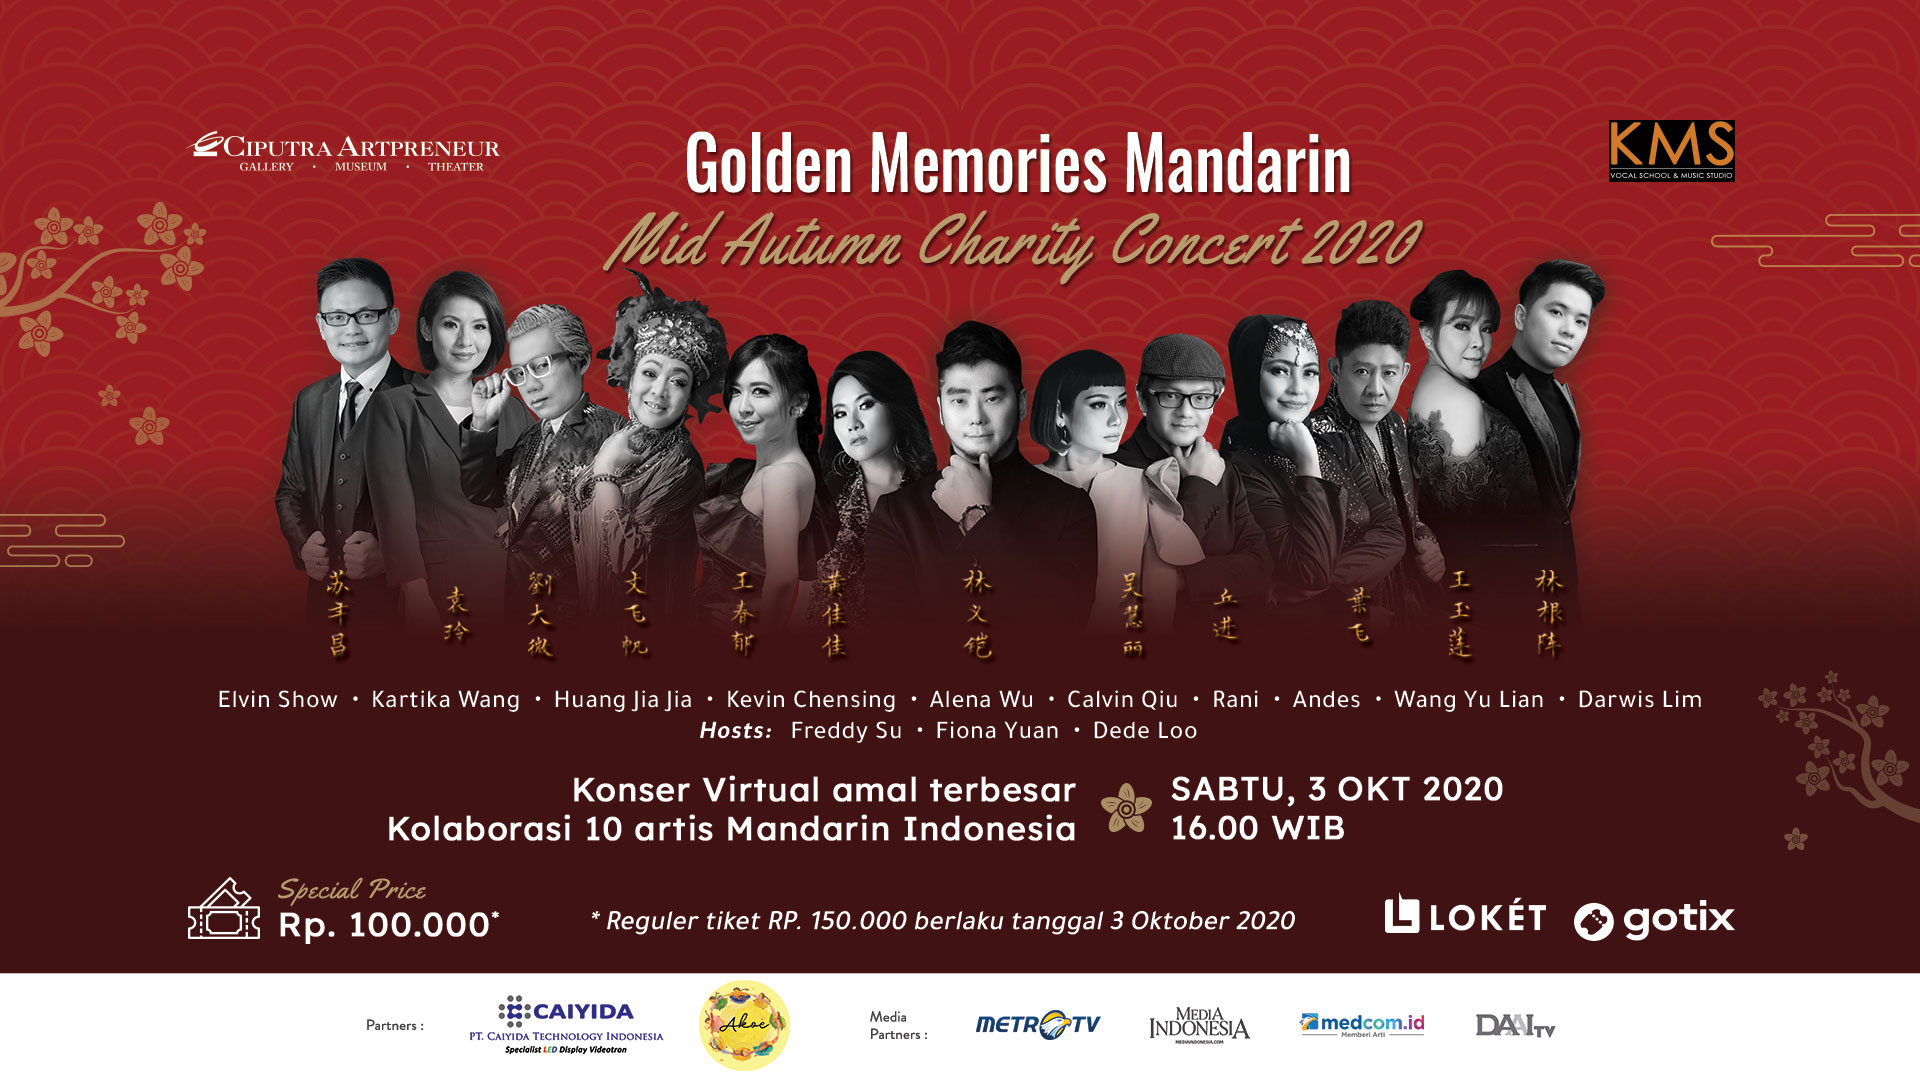 Golden Memories Mandarin